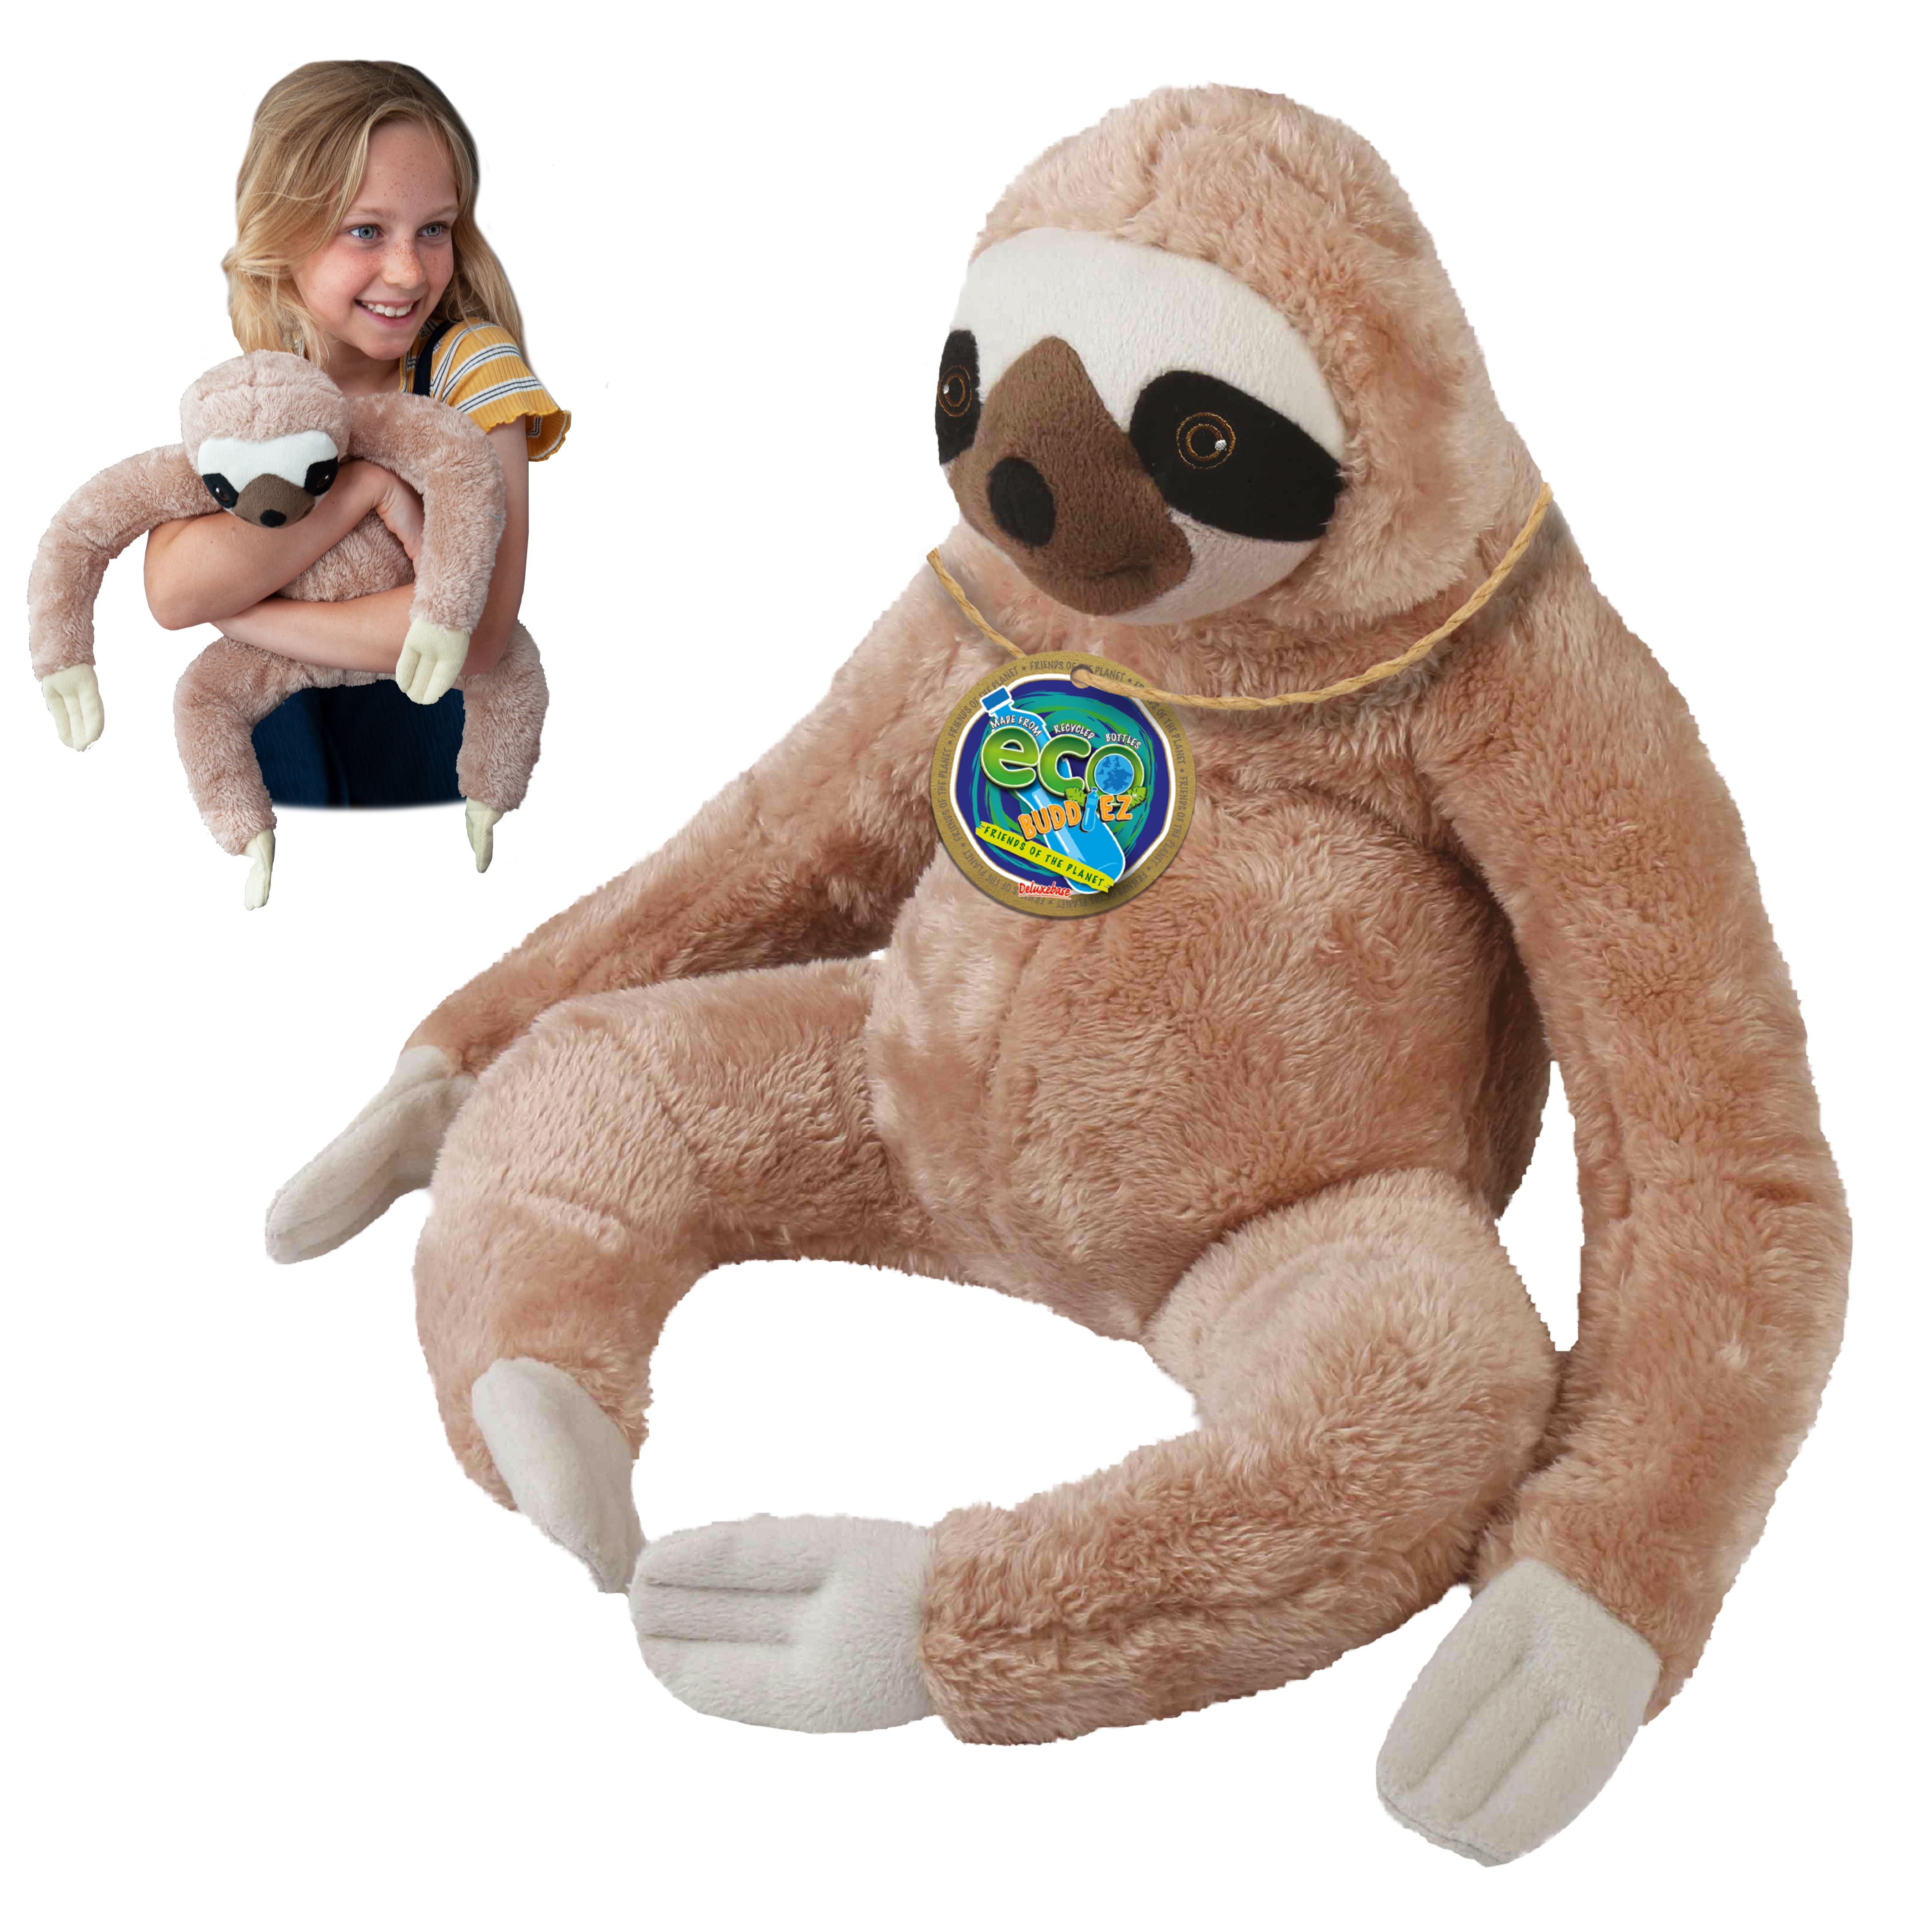 NEW Set of 2-13" GUND Pusheen with Sloth Plush Stuffed Animal 